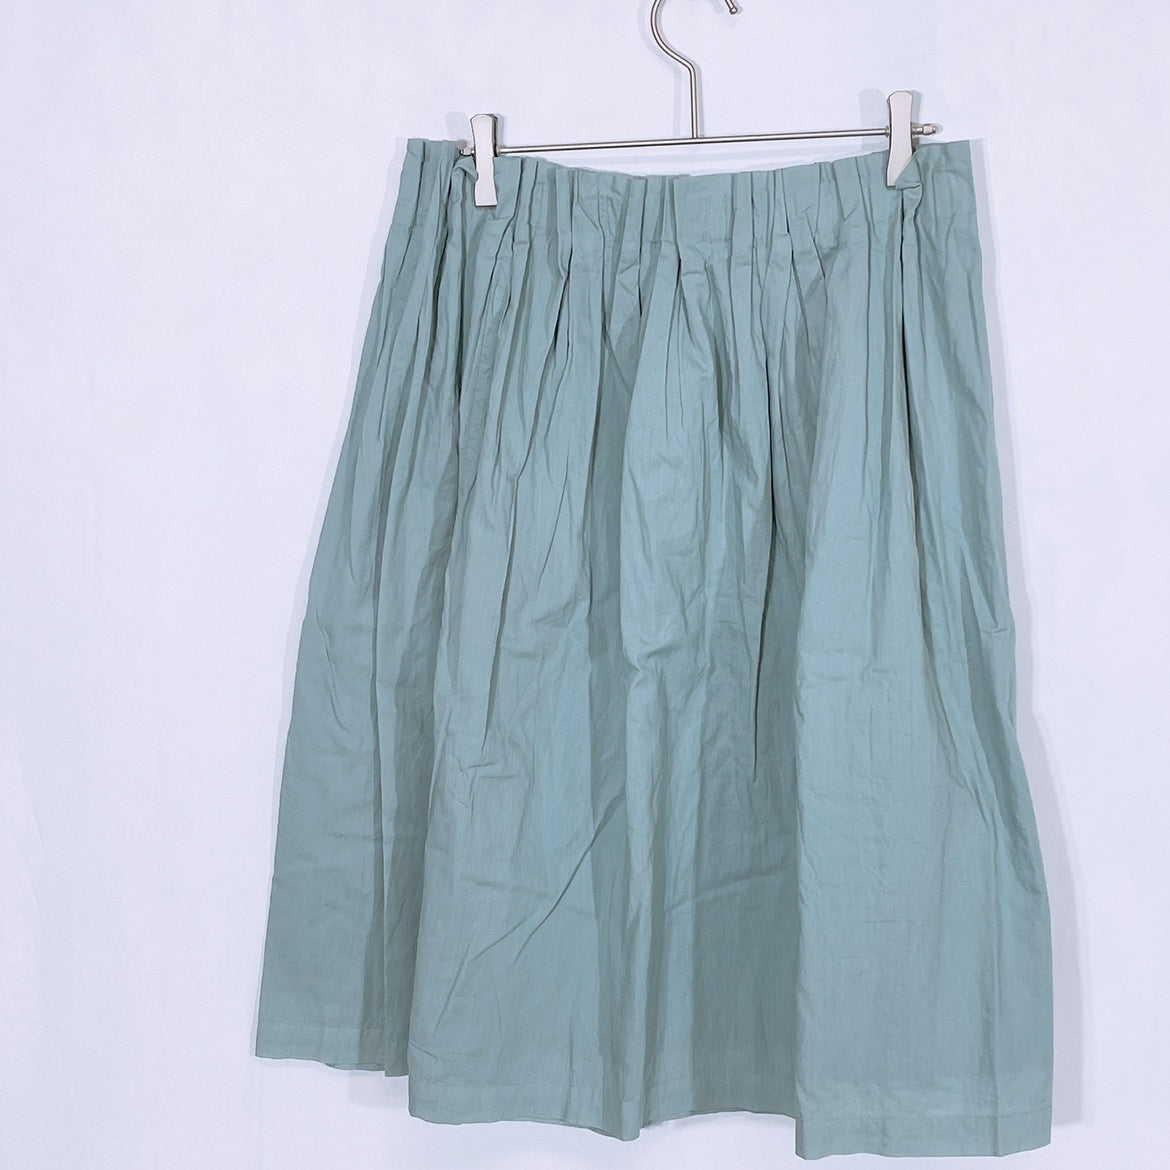 【18229】 MELROSE CLAIRE メルローズクレール ひざ丈スカート ライムグリーン 緑 グリーン かわいい シンプル 無地 普段着